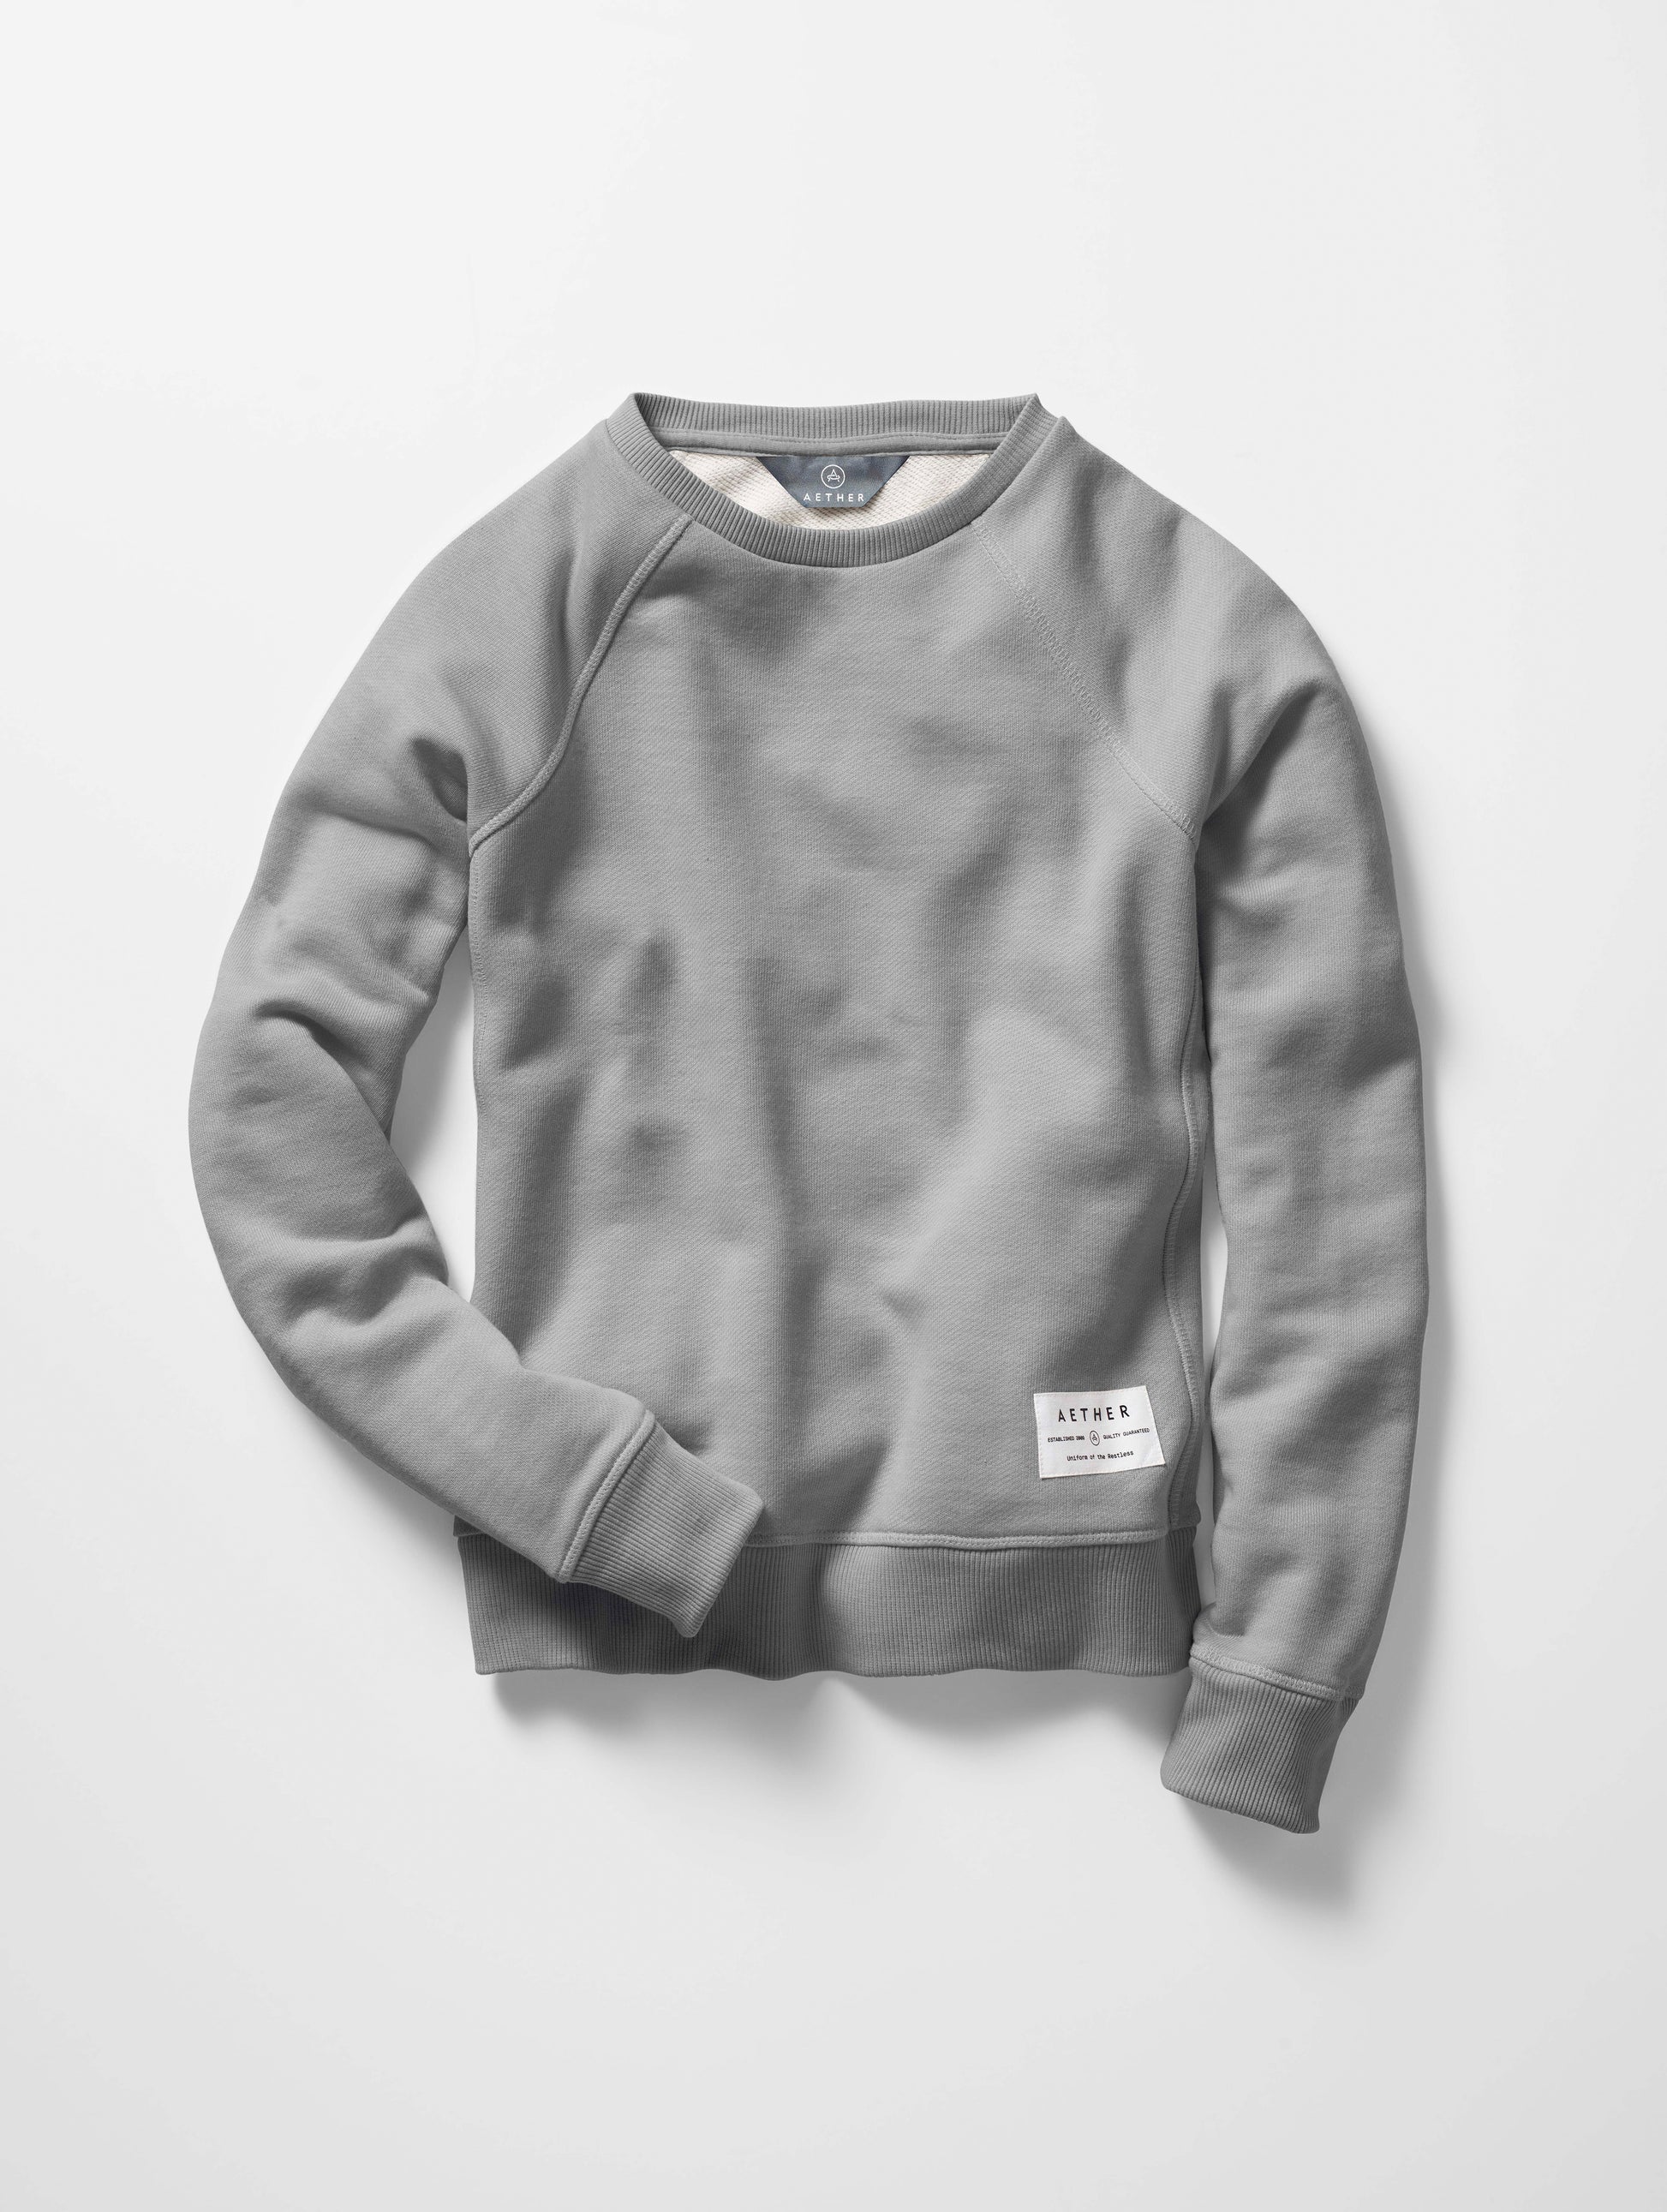 grey sweatshirt for women